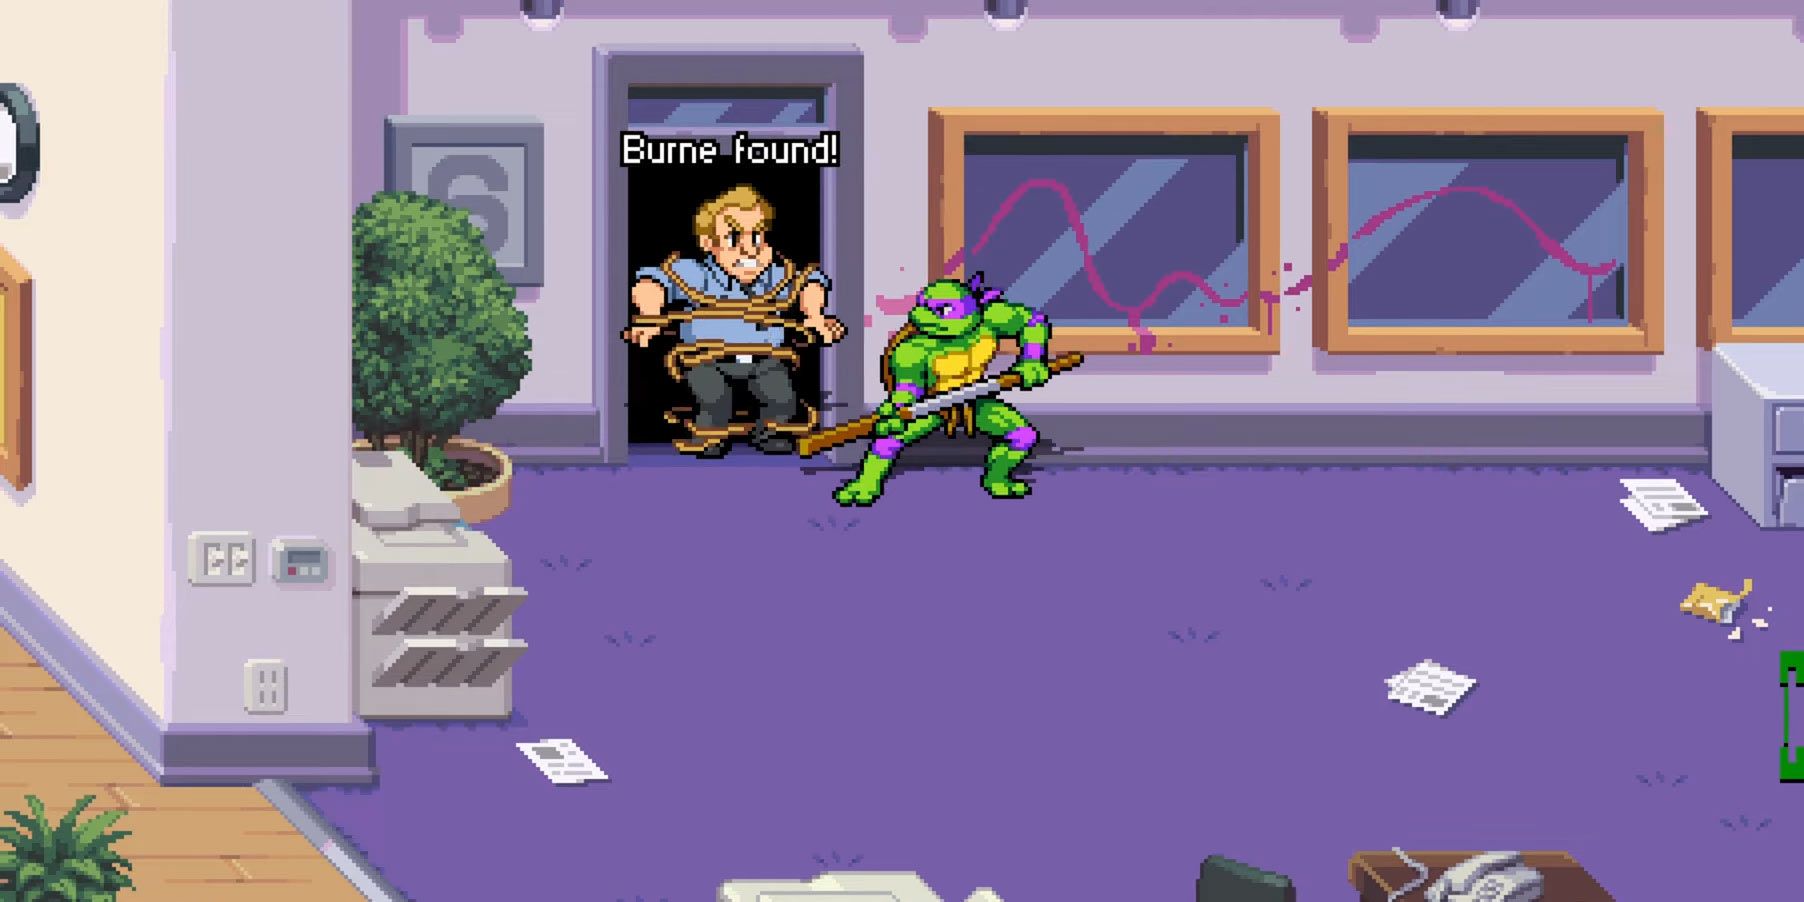 A screenshot showing Donatello rescuing Burne behind a hidden door in Teenage Mutant Ninja Turtles: Shredder's Revenge